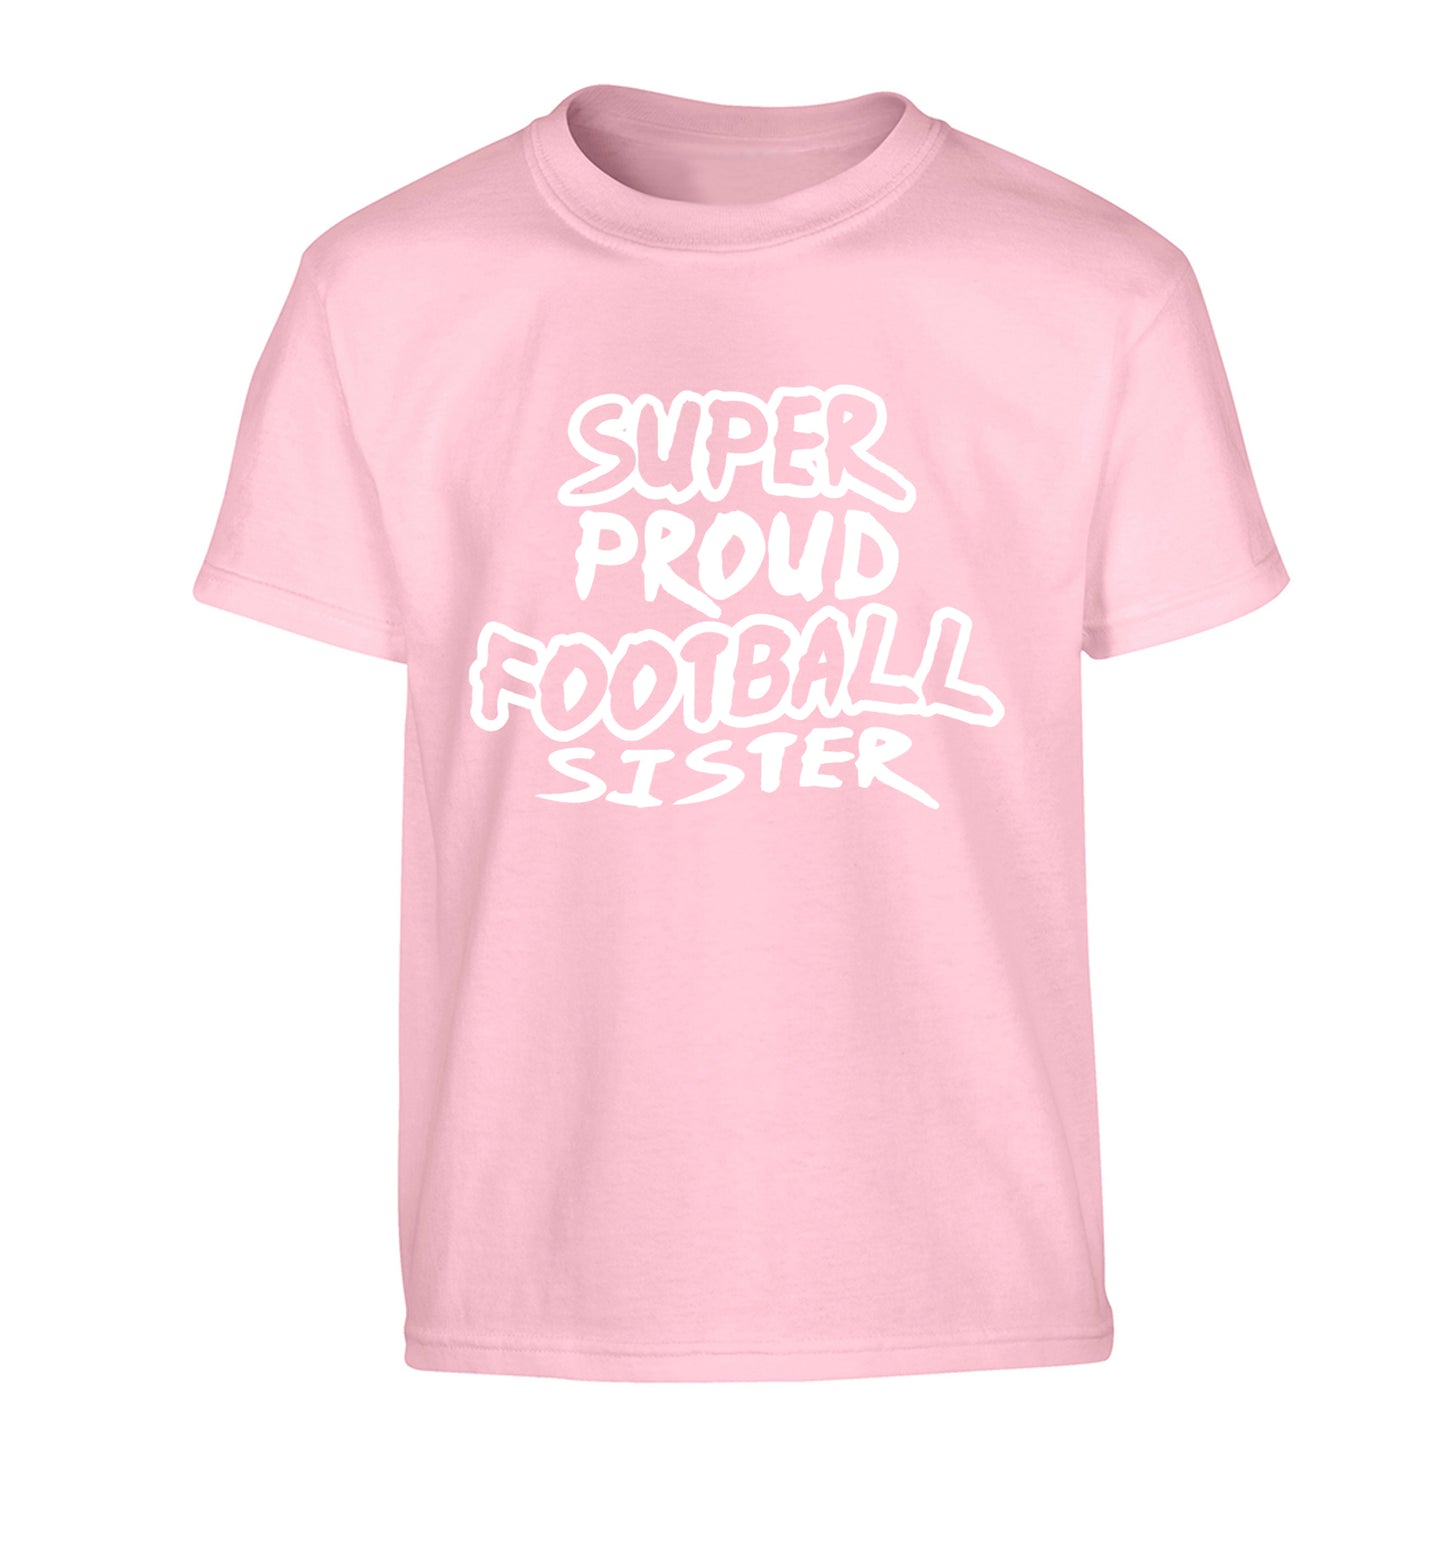 Super proud football sister Children's light pink Tshirt 12-14 Years